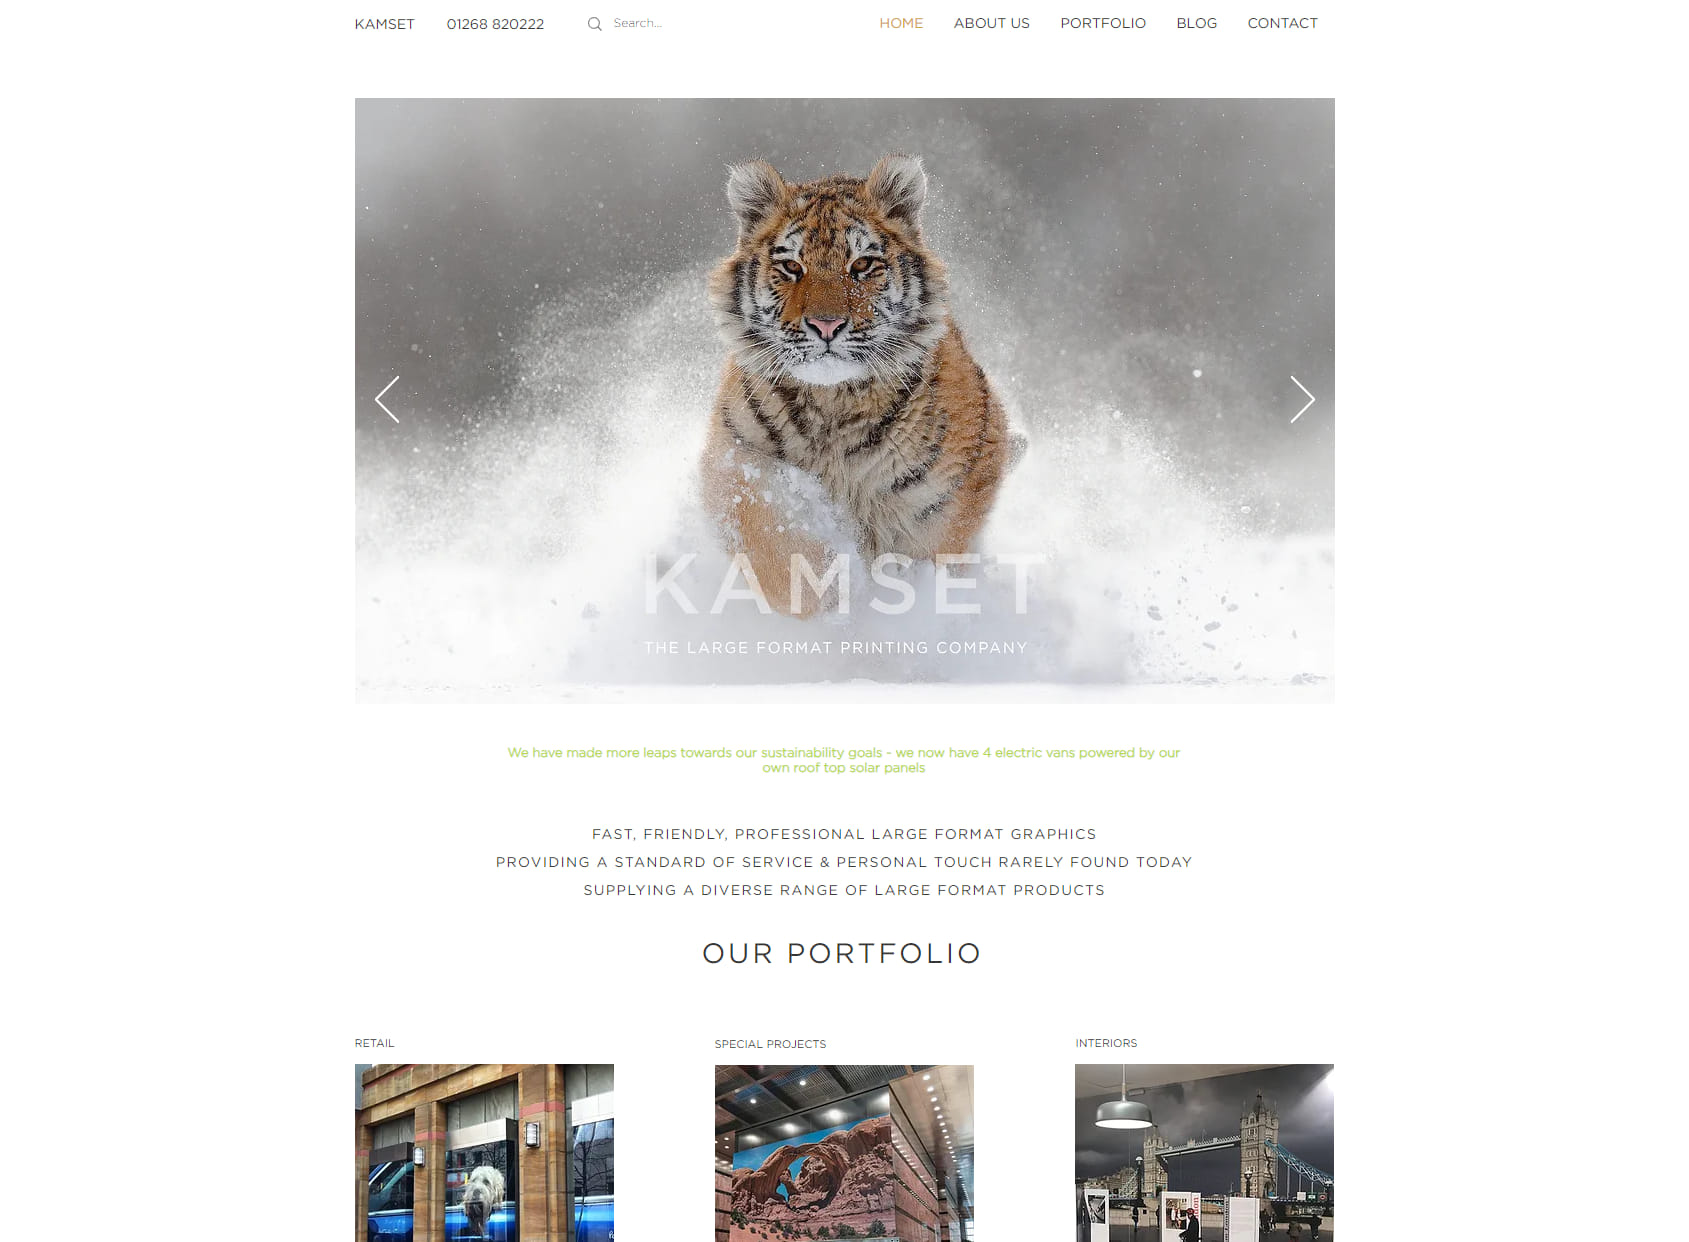 Kamset - The Large Format Printing Company